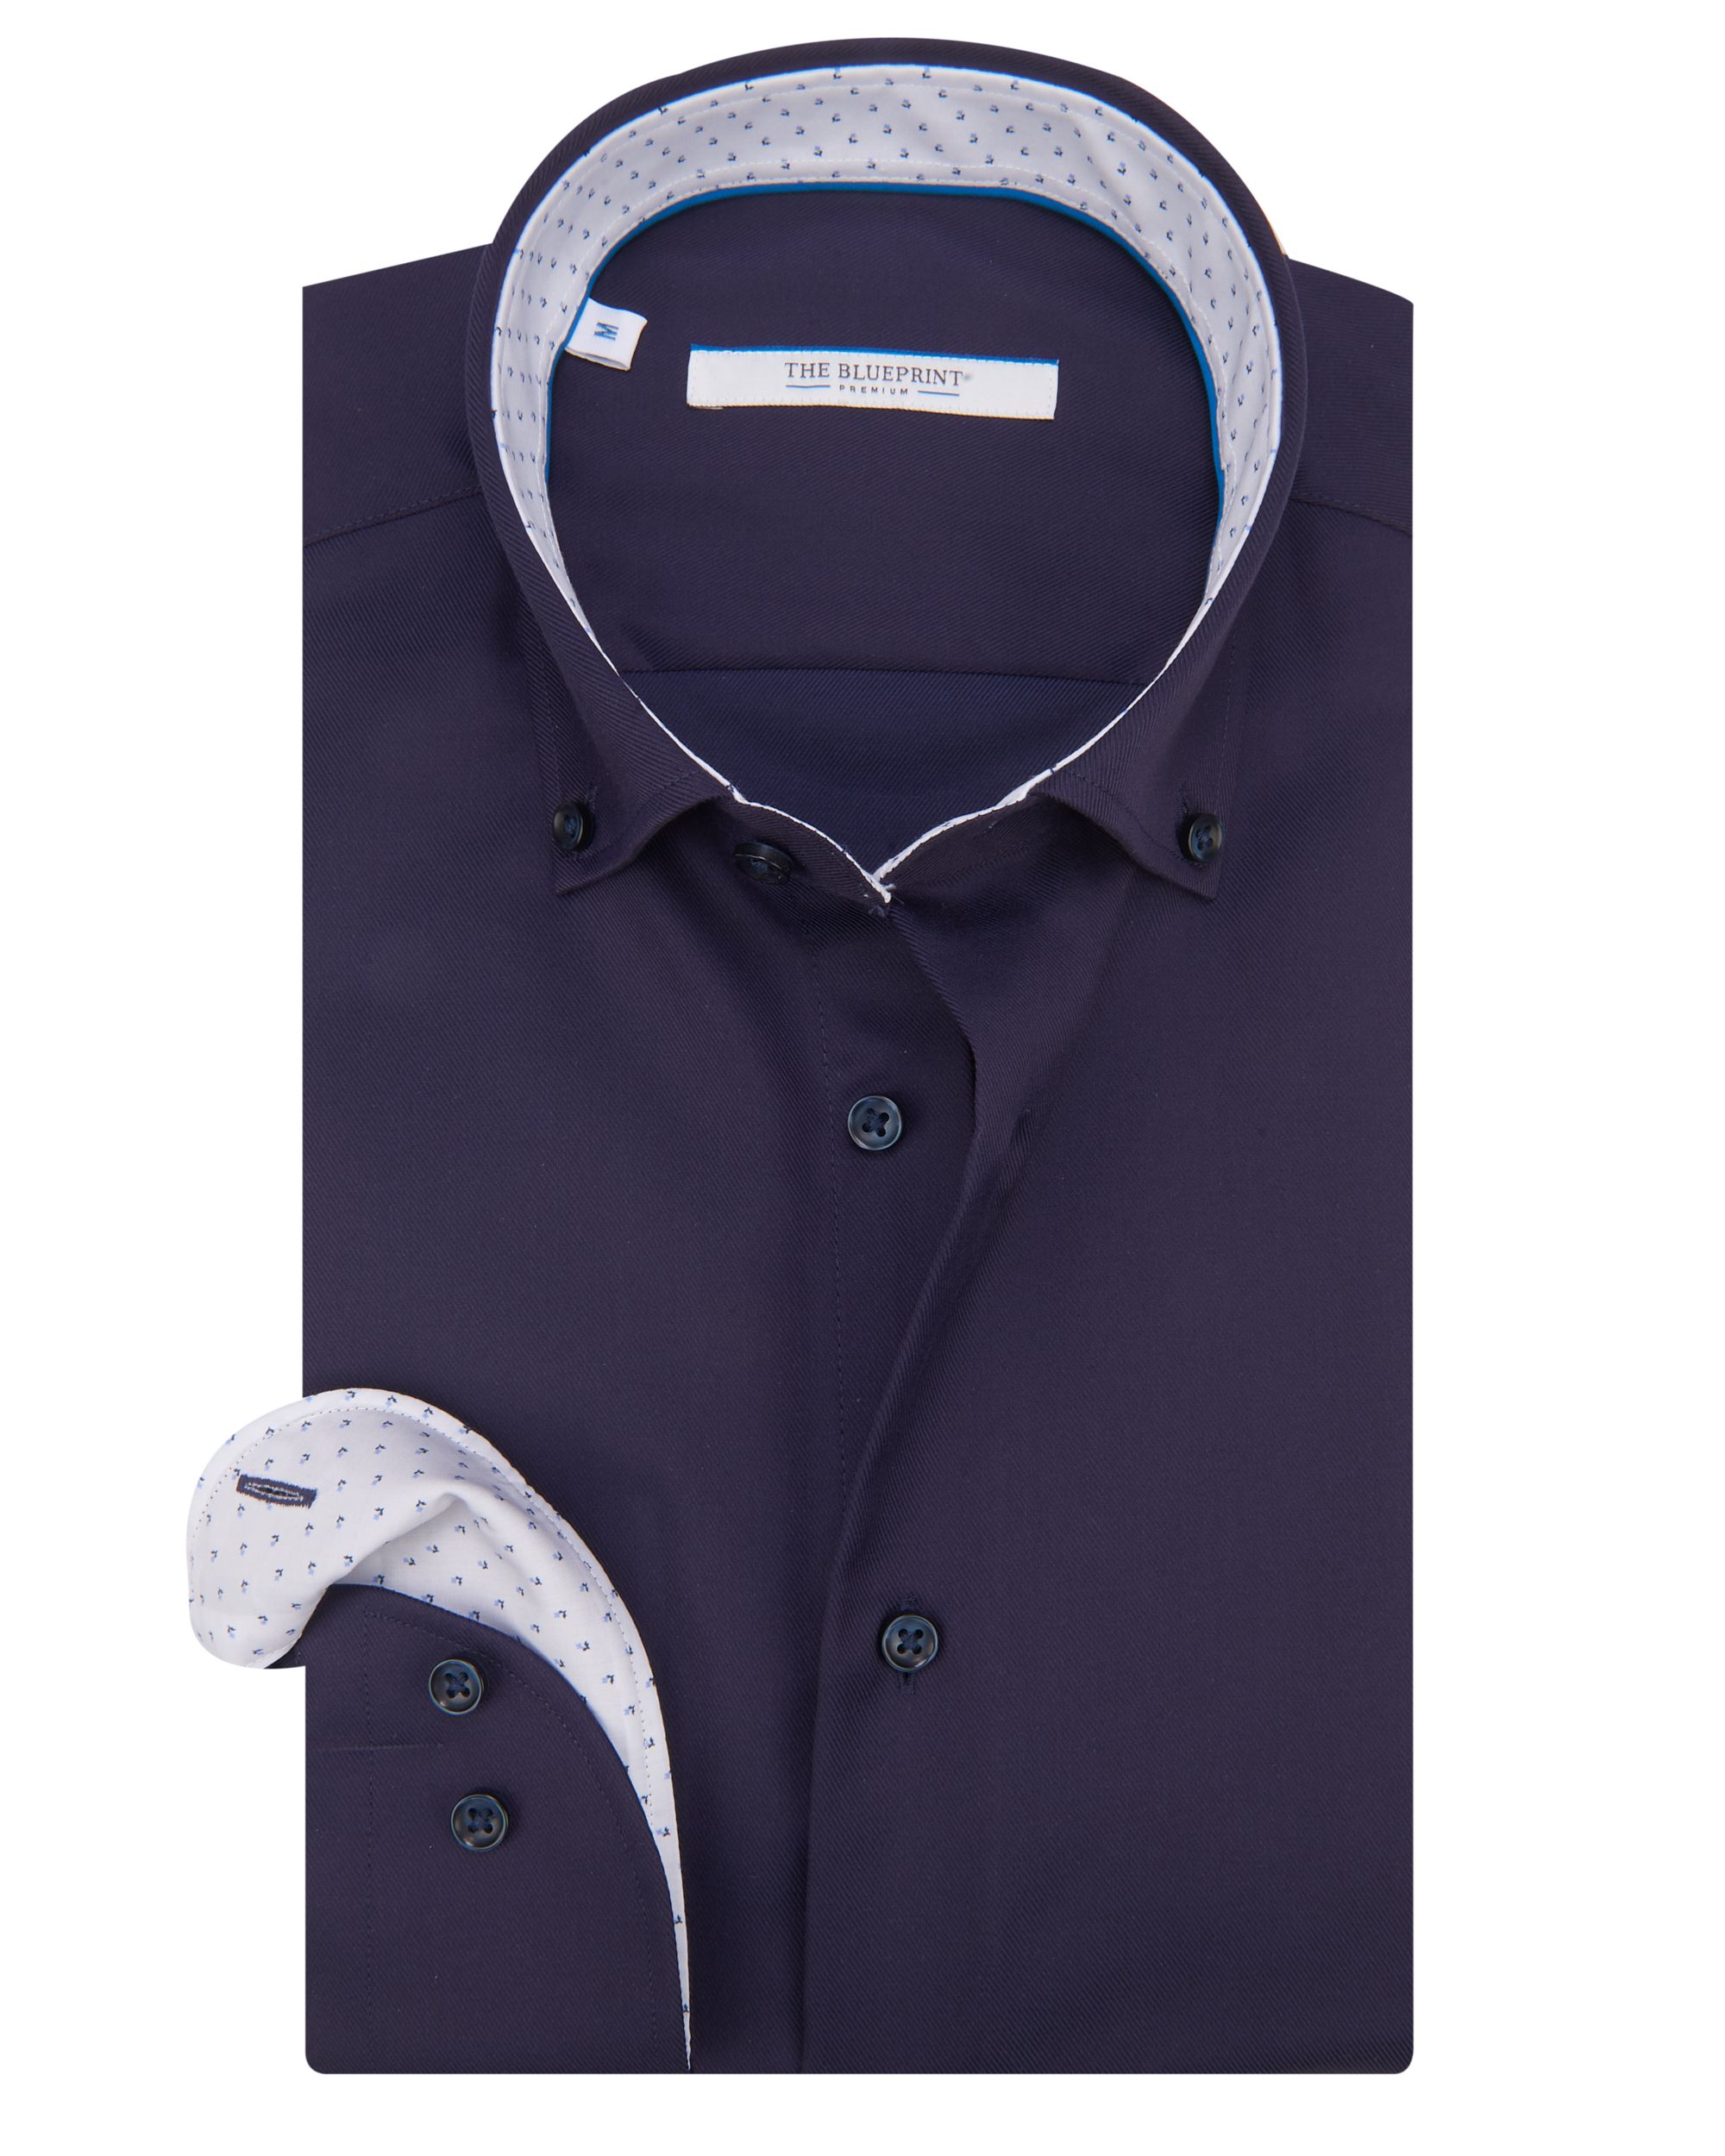 The BLUEPRINT Premium Trendy overhemd LM Donkerblauw uni 078653-001-XL